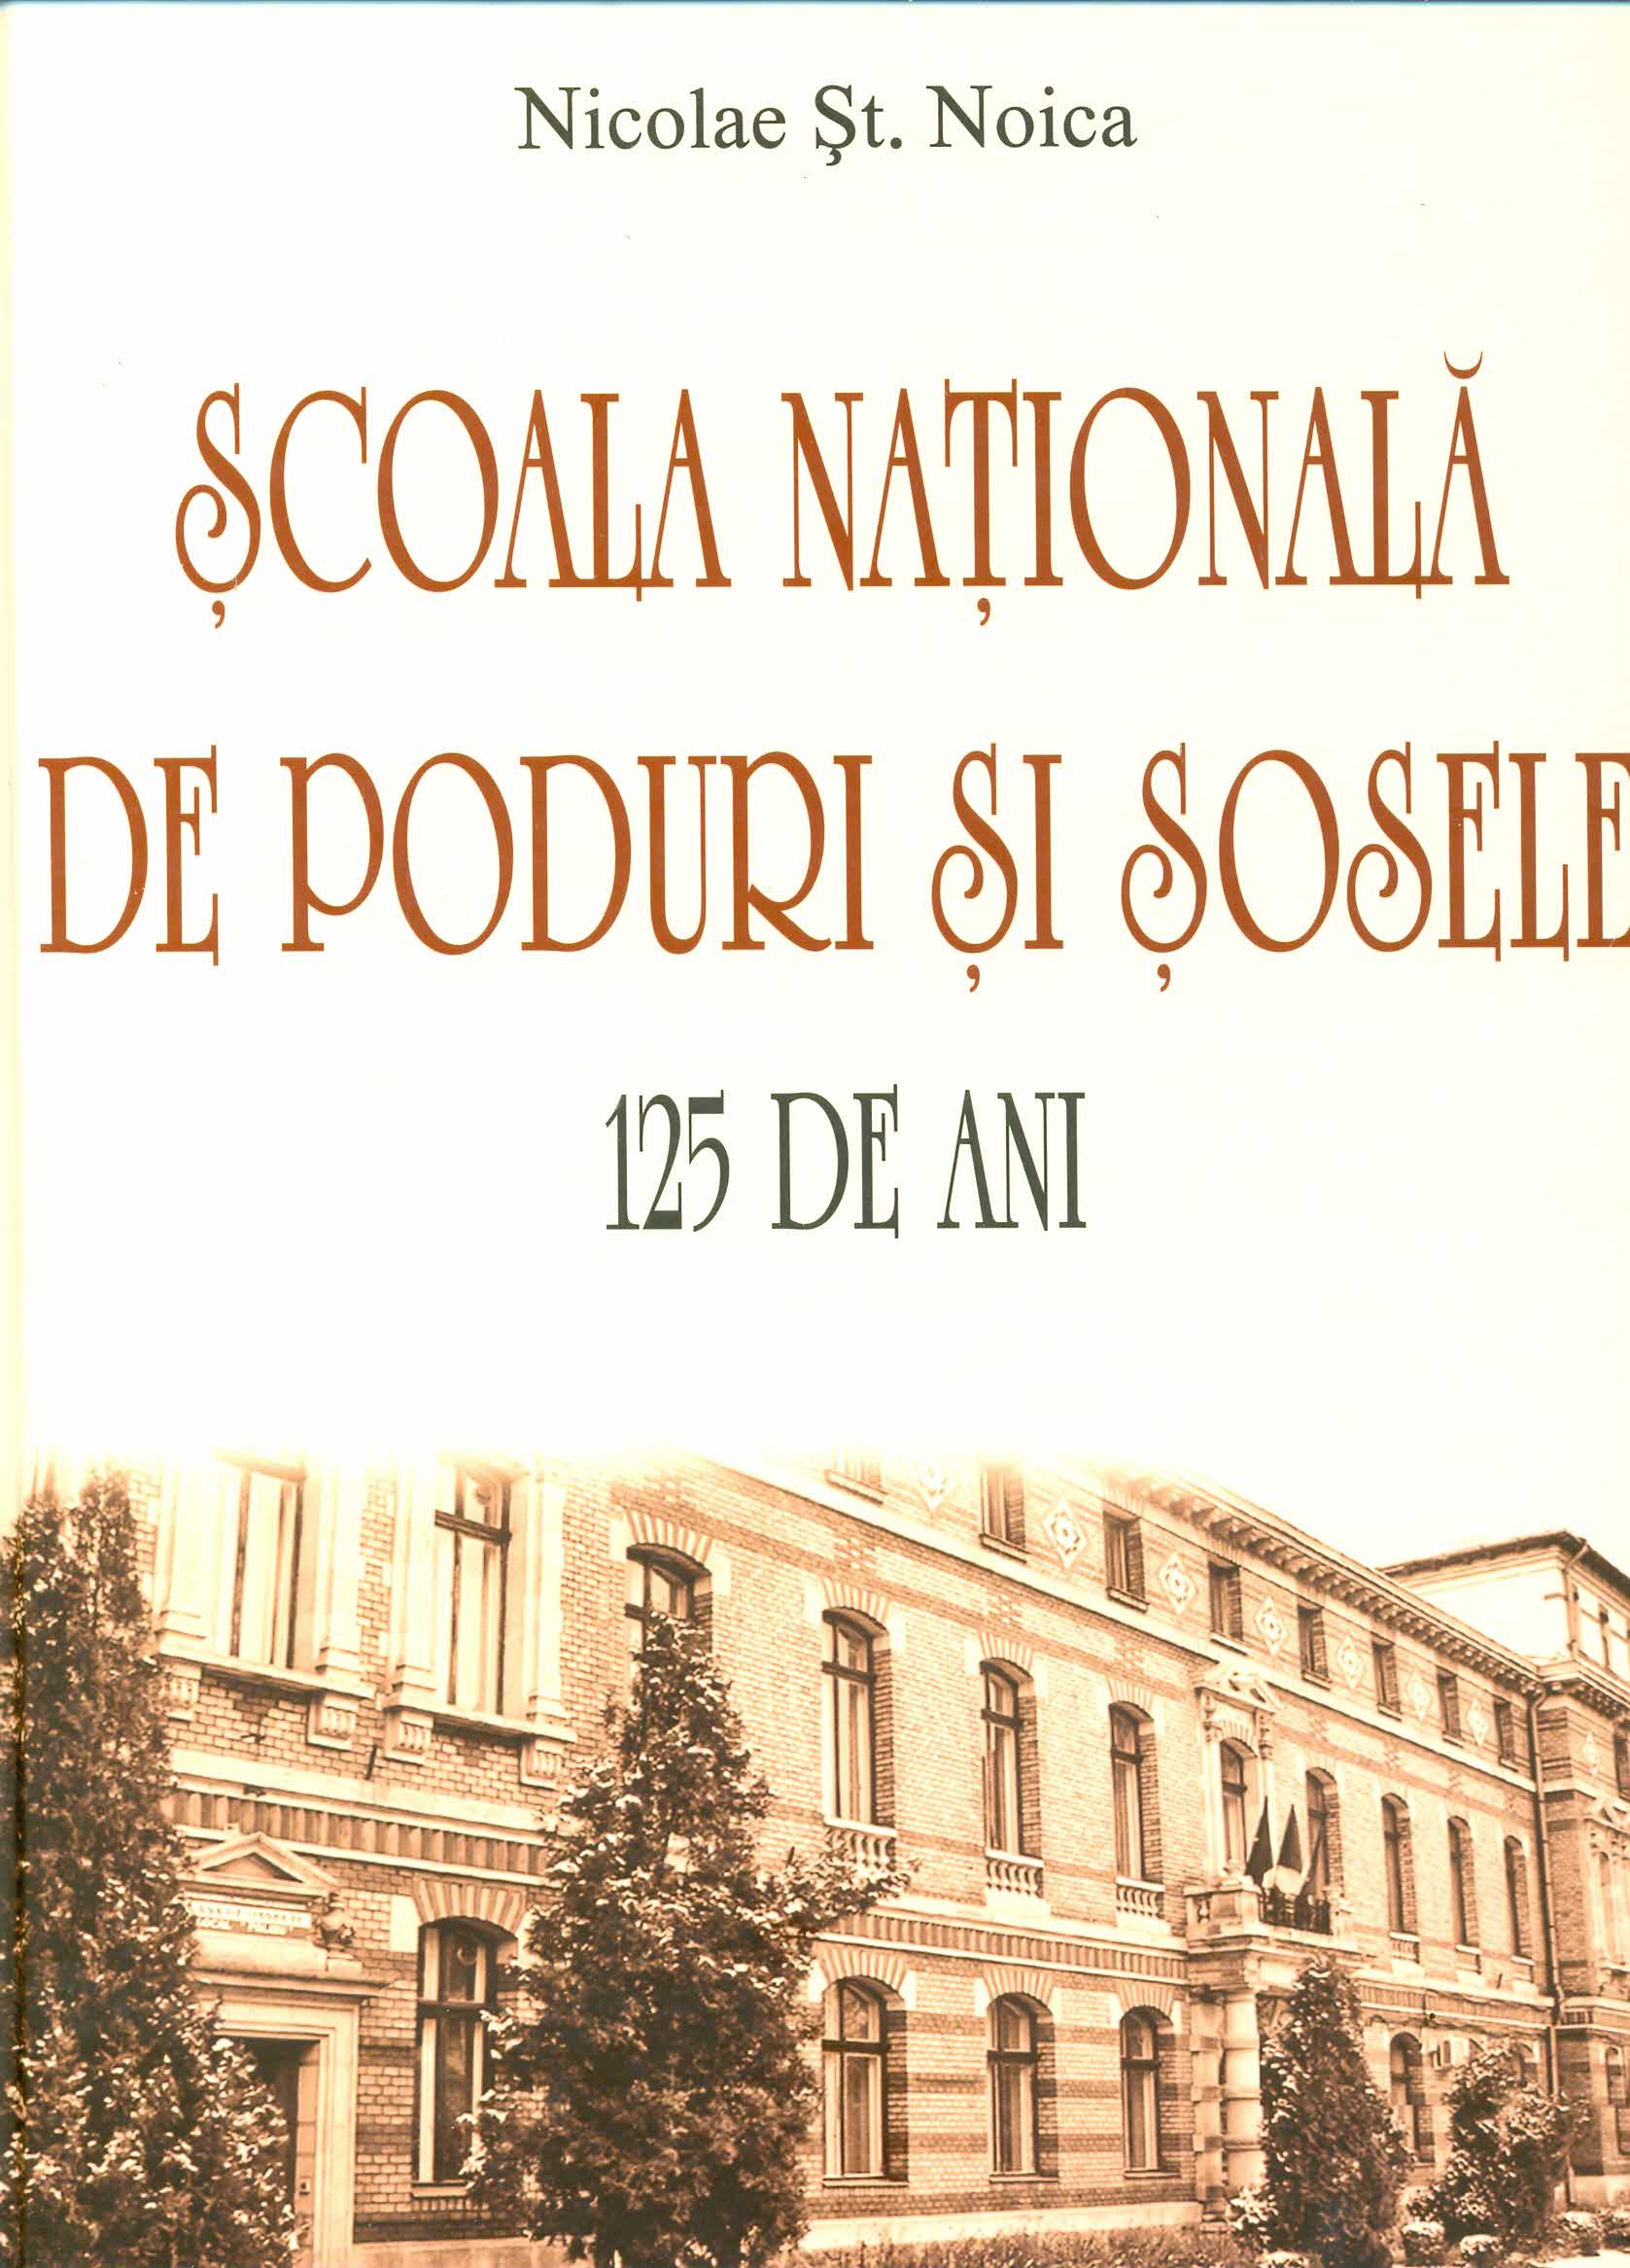 Scoala nationala de poduri si sosele. 125 de ani | Nicolae St. Noica